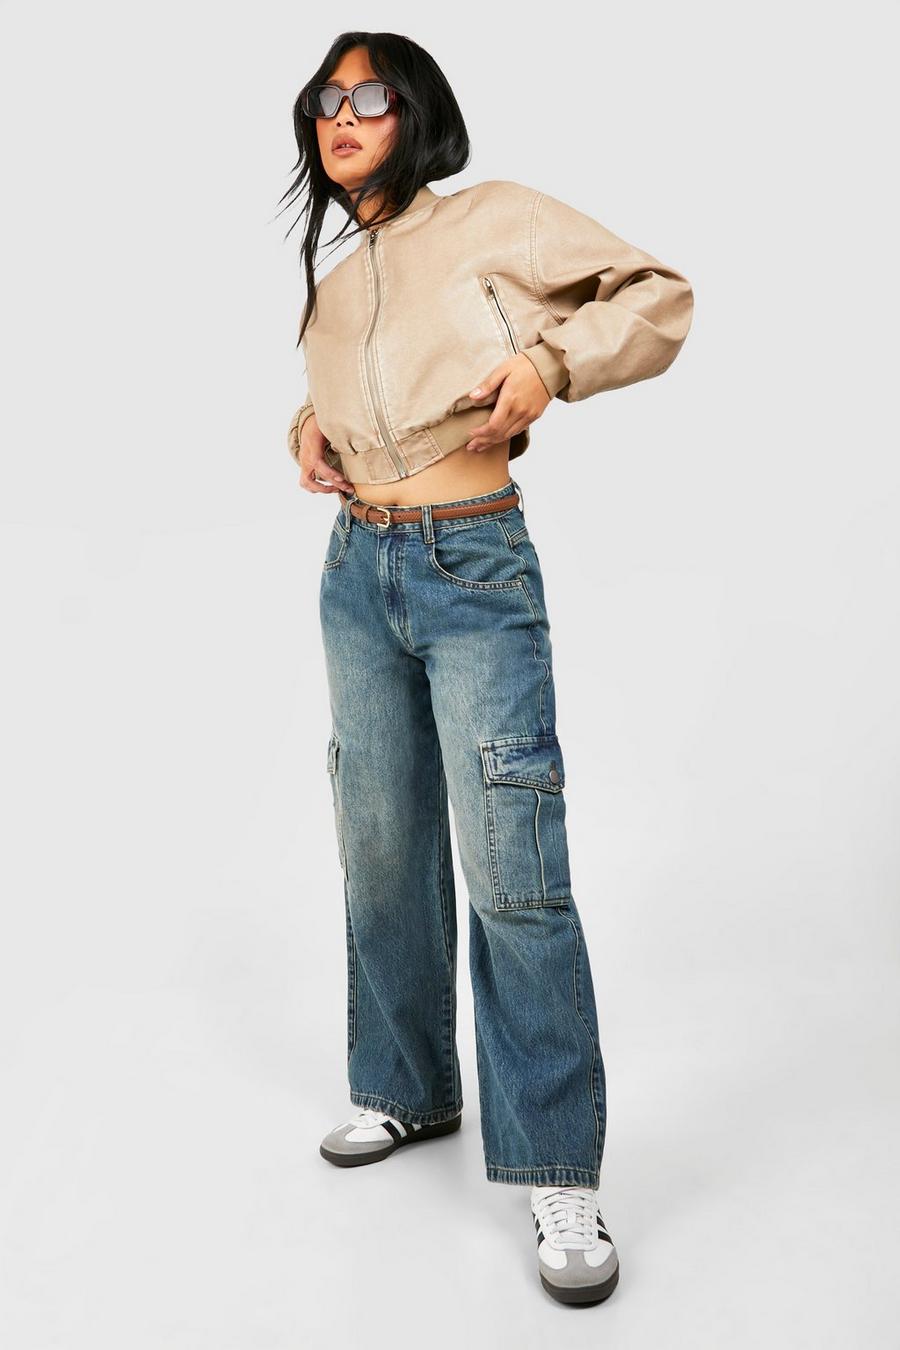 Tommy jeans Tanzanite hilfiger світшот томмі хілфігер світшот томмі